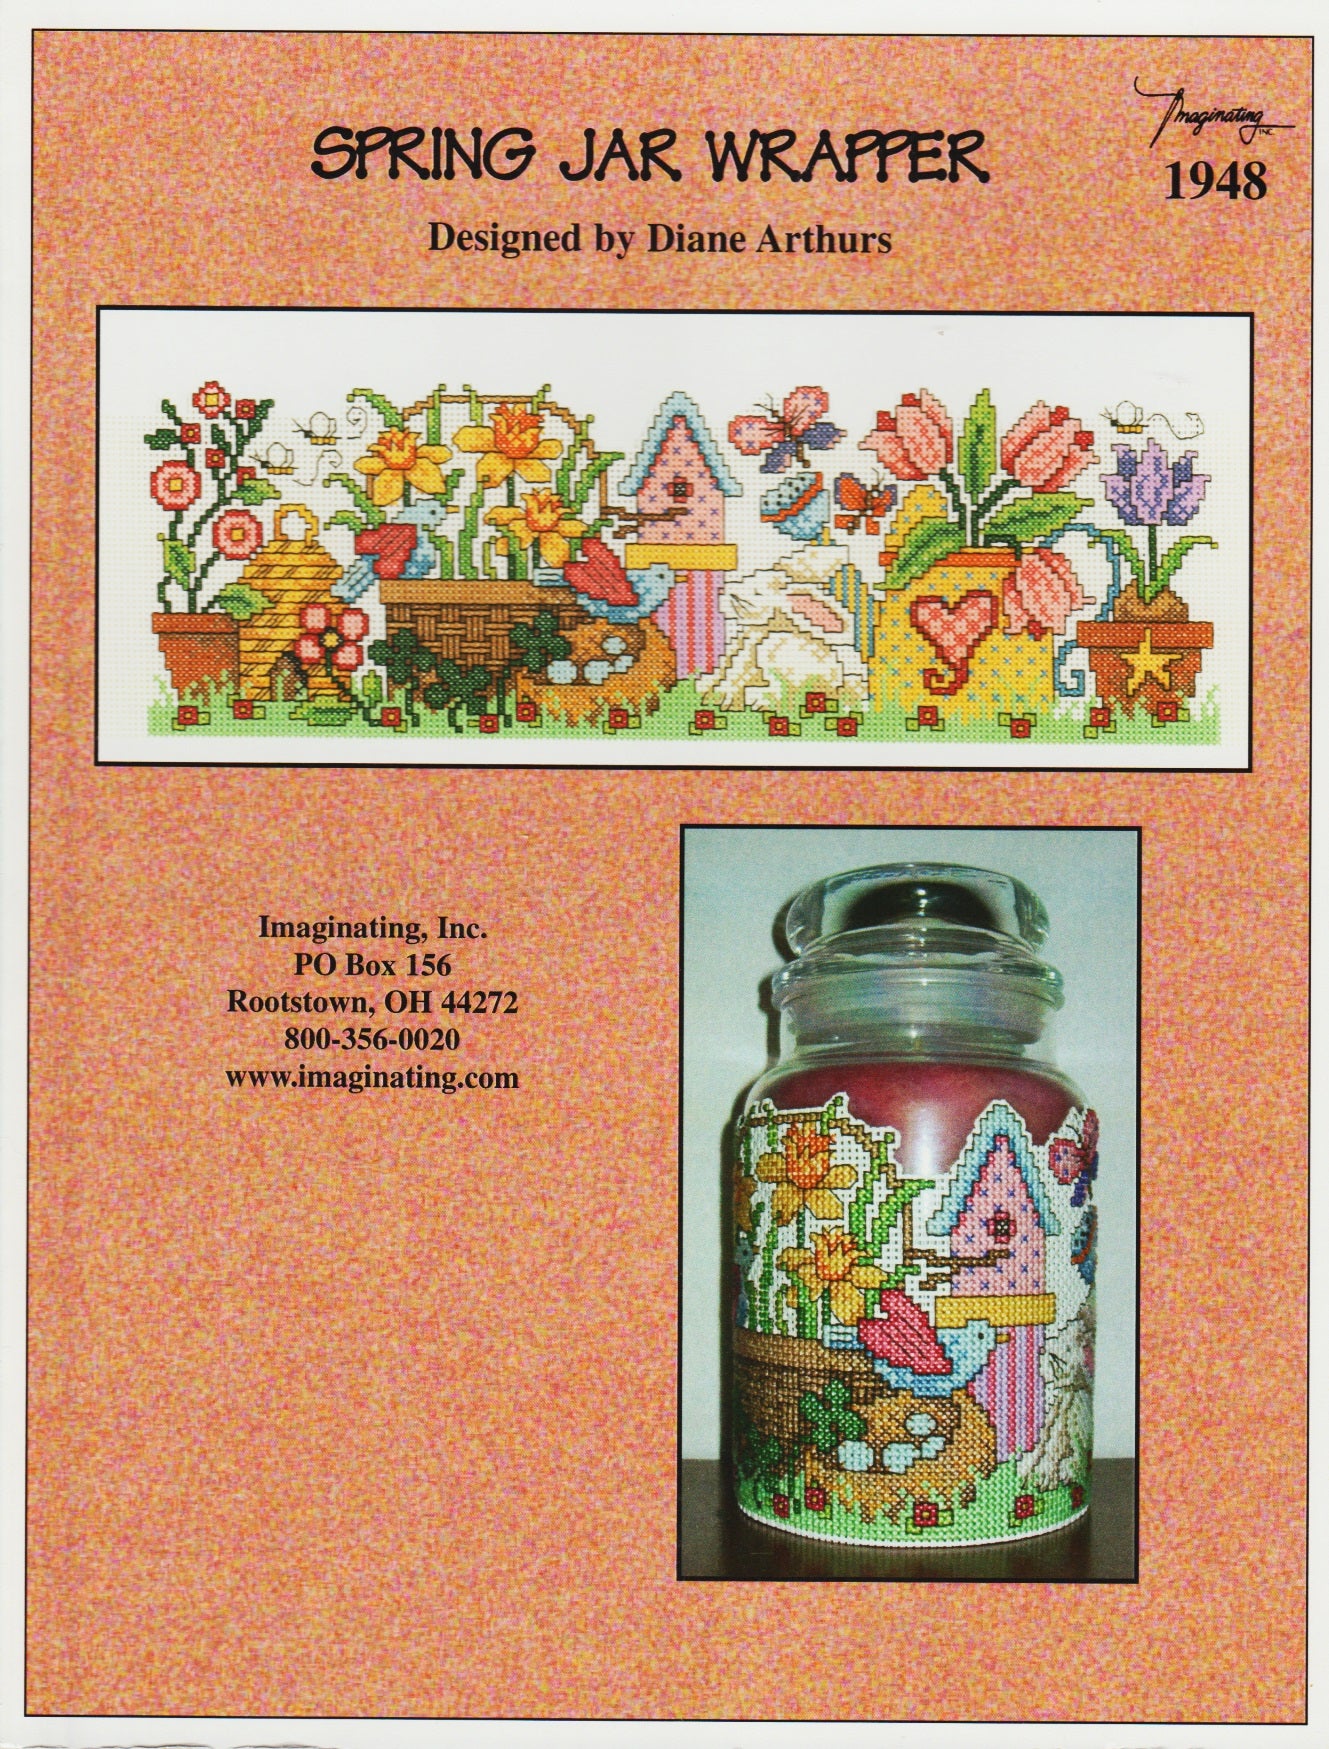 Imaginating Spring Jar Wrapper 1948 cross stitch pattern